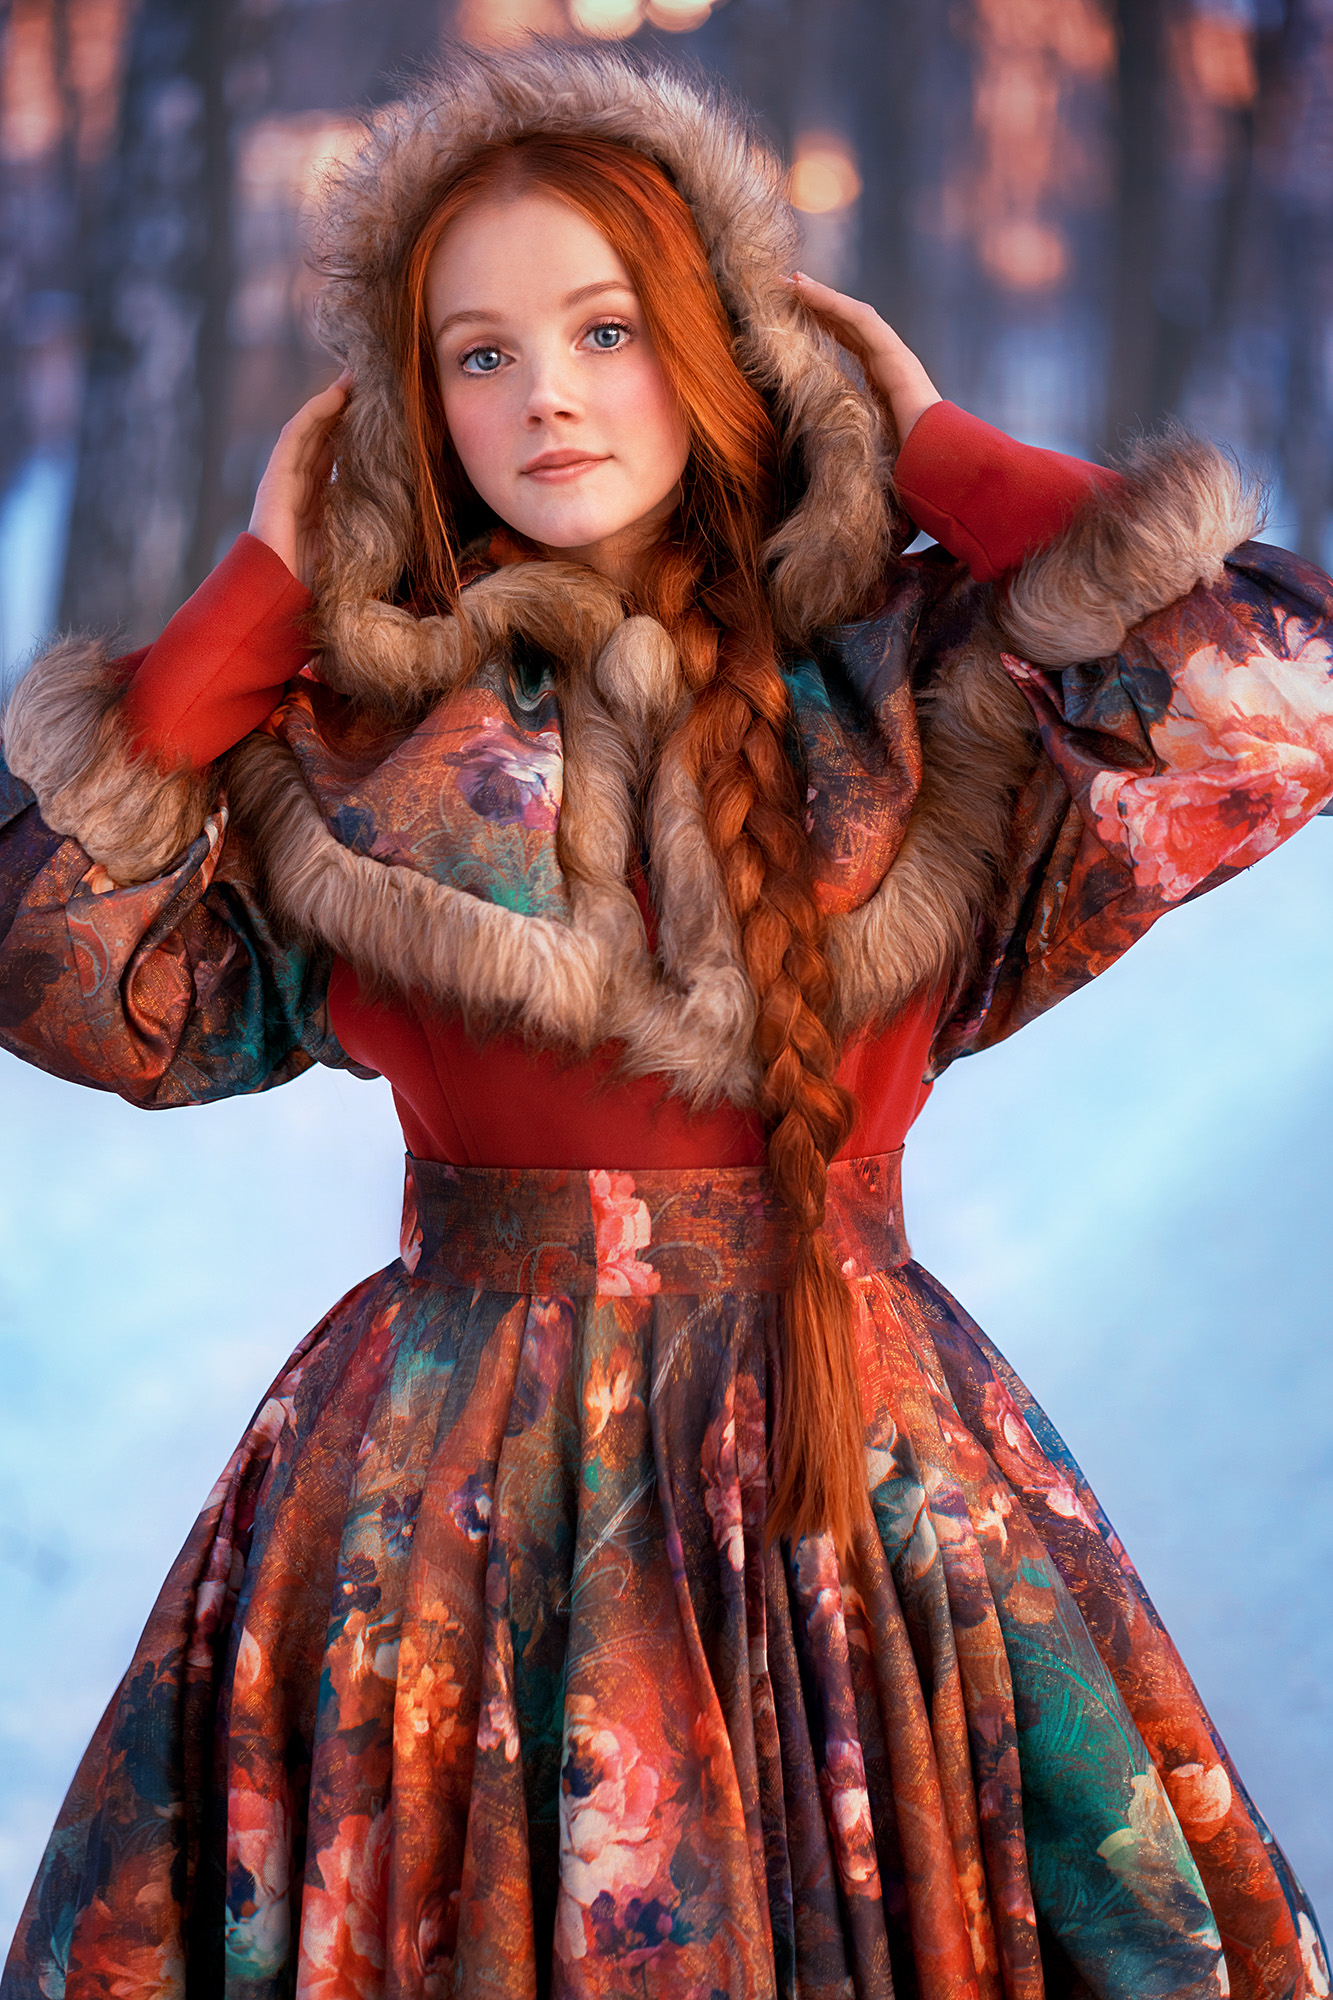 People 1333x2000 Natalia Antipas women redhead hoods colorful braids long hair freckles blue eyes snow